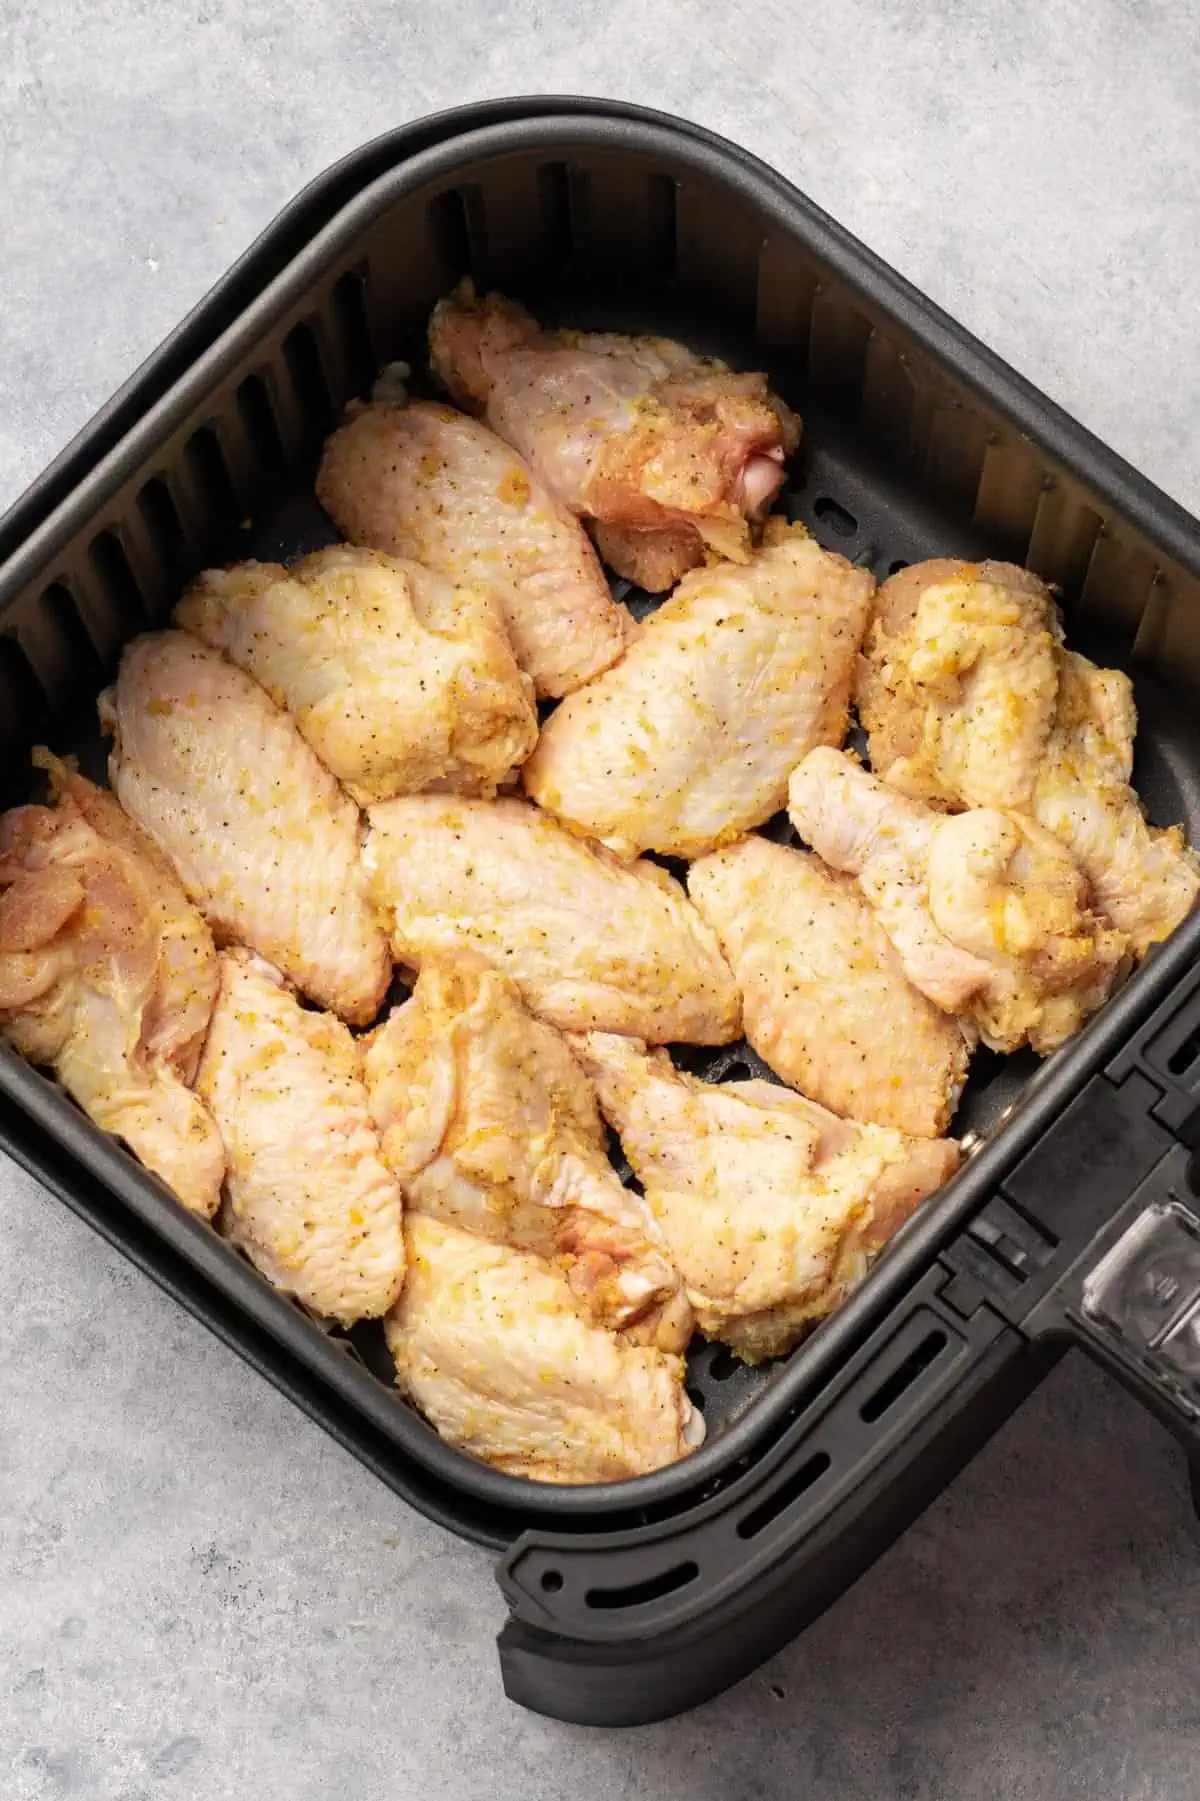 Lemon pepper chicken wings inside the air fryer basket before cooking.